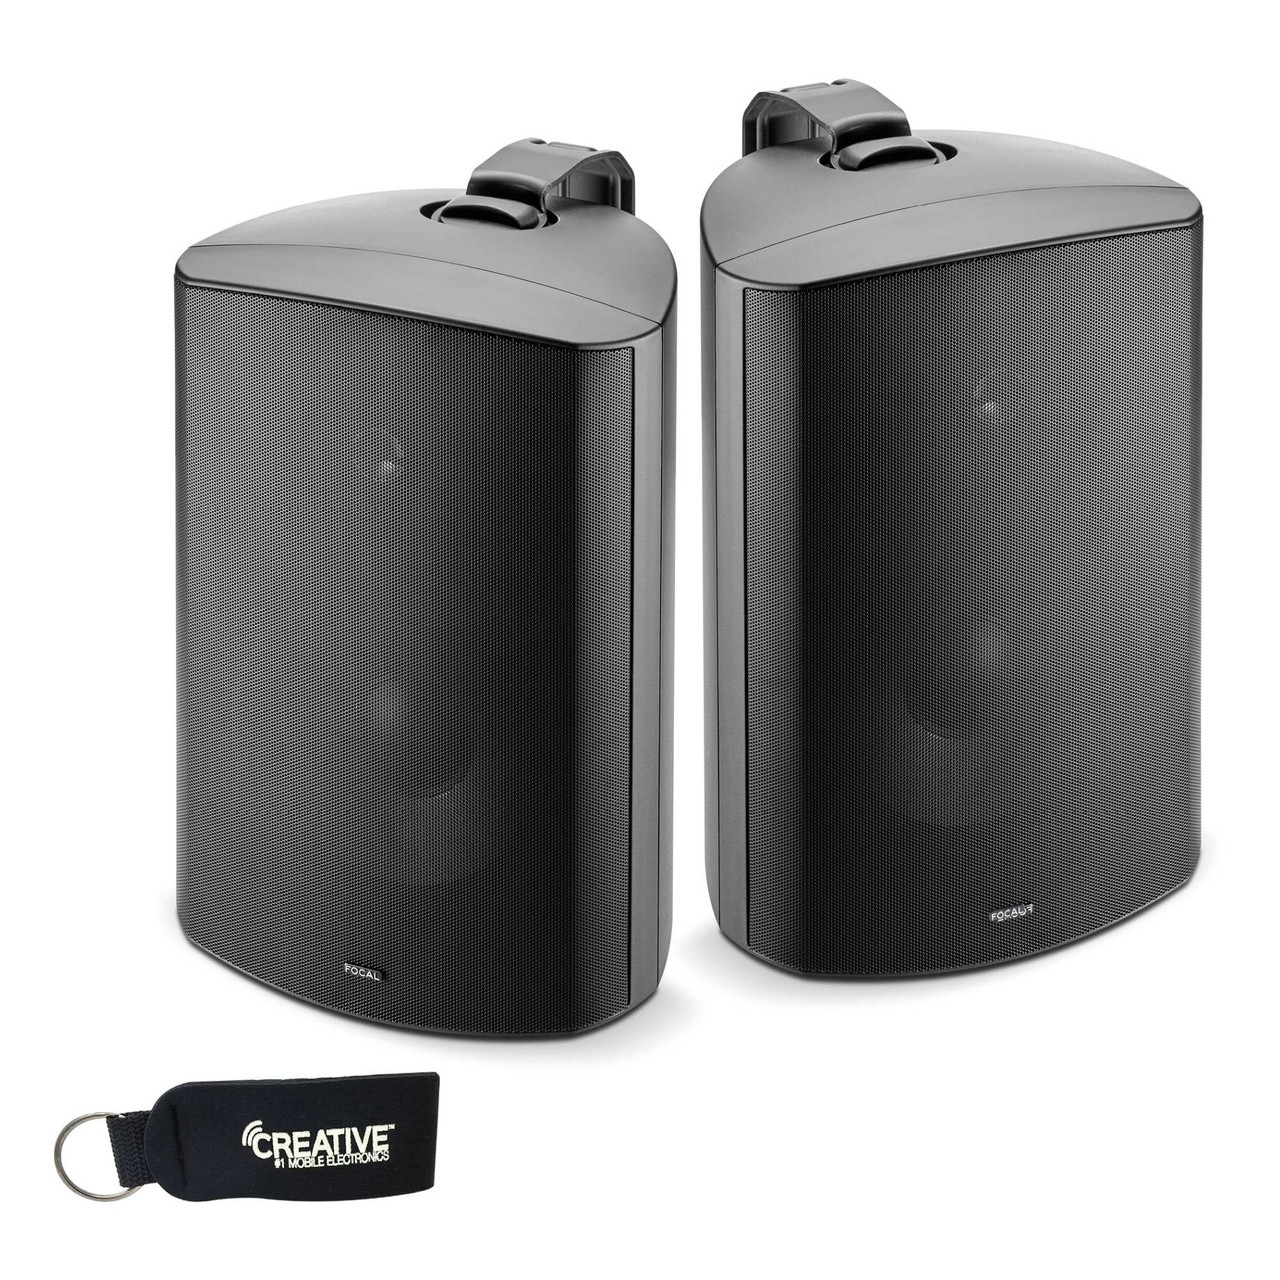 focal 2 ohm speakers